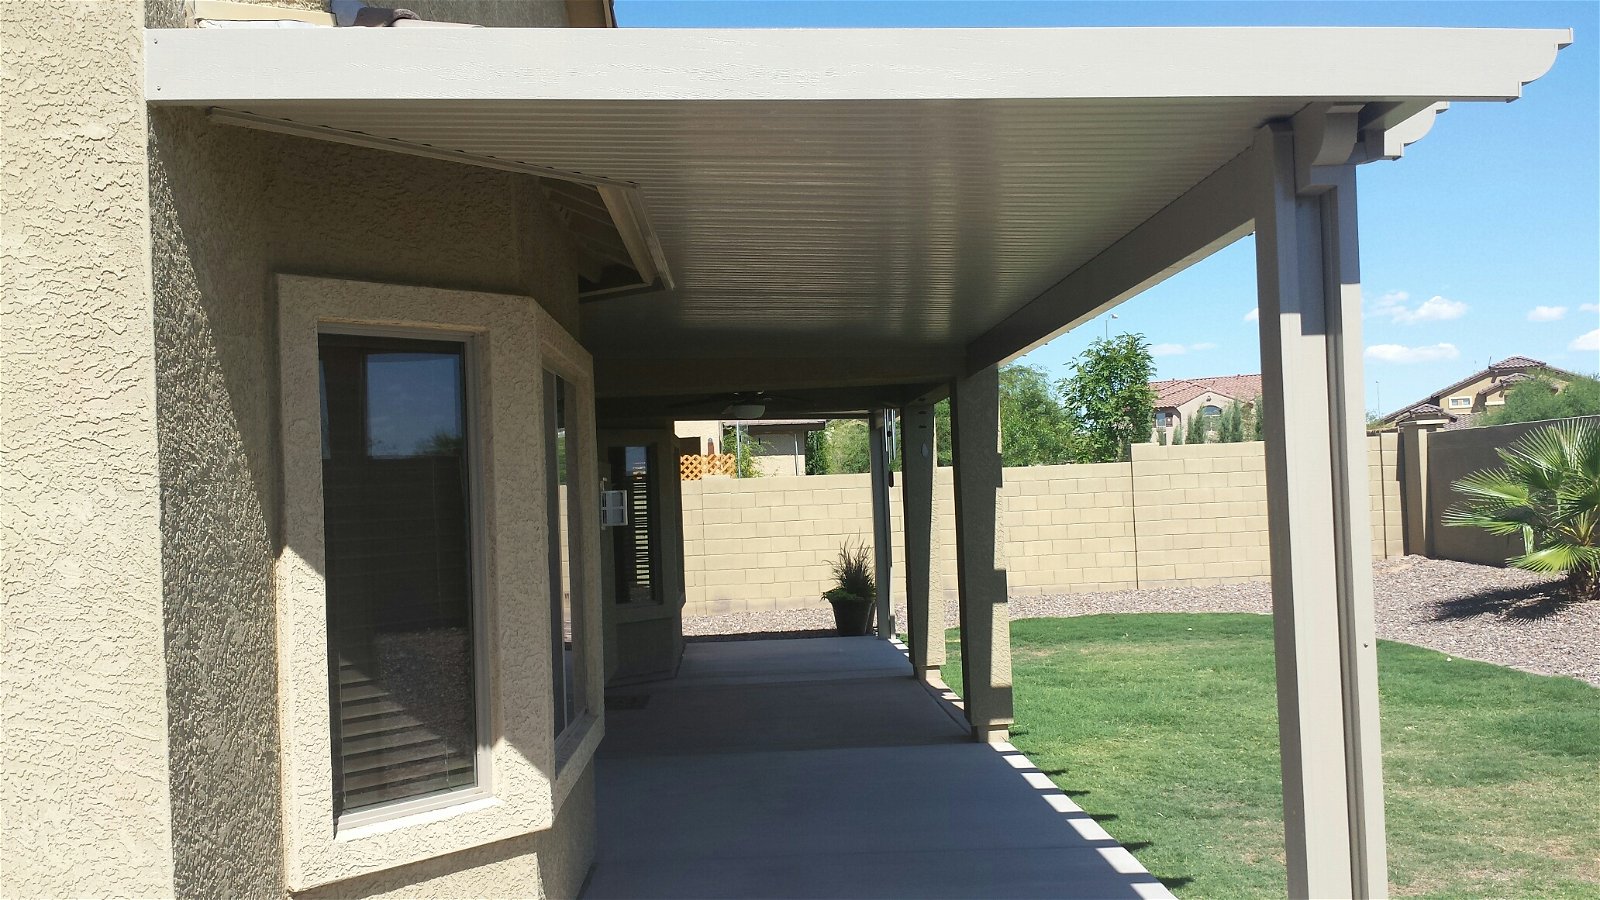 Alumawood Solid Patio Cover in Mesa, Arizona | 480-926-2300